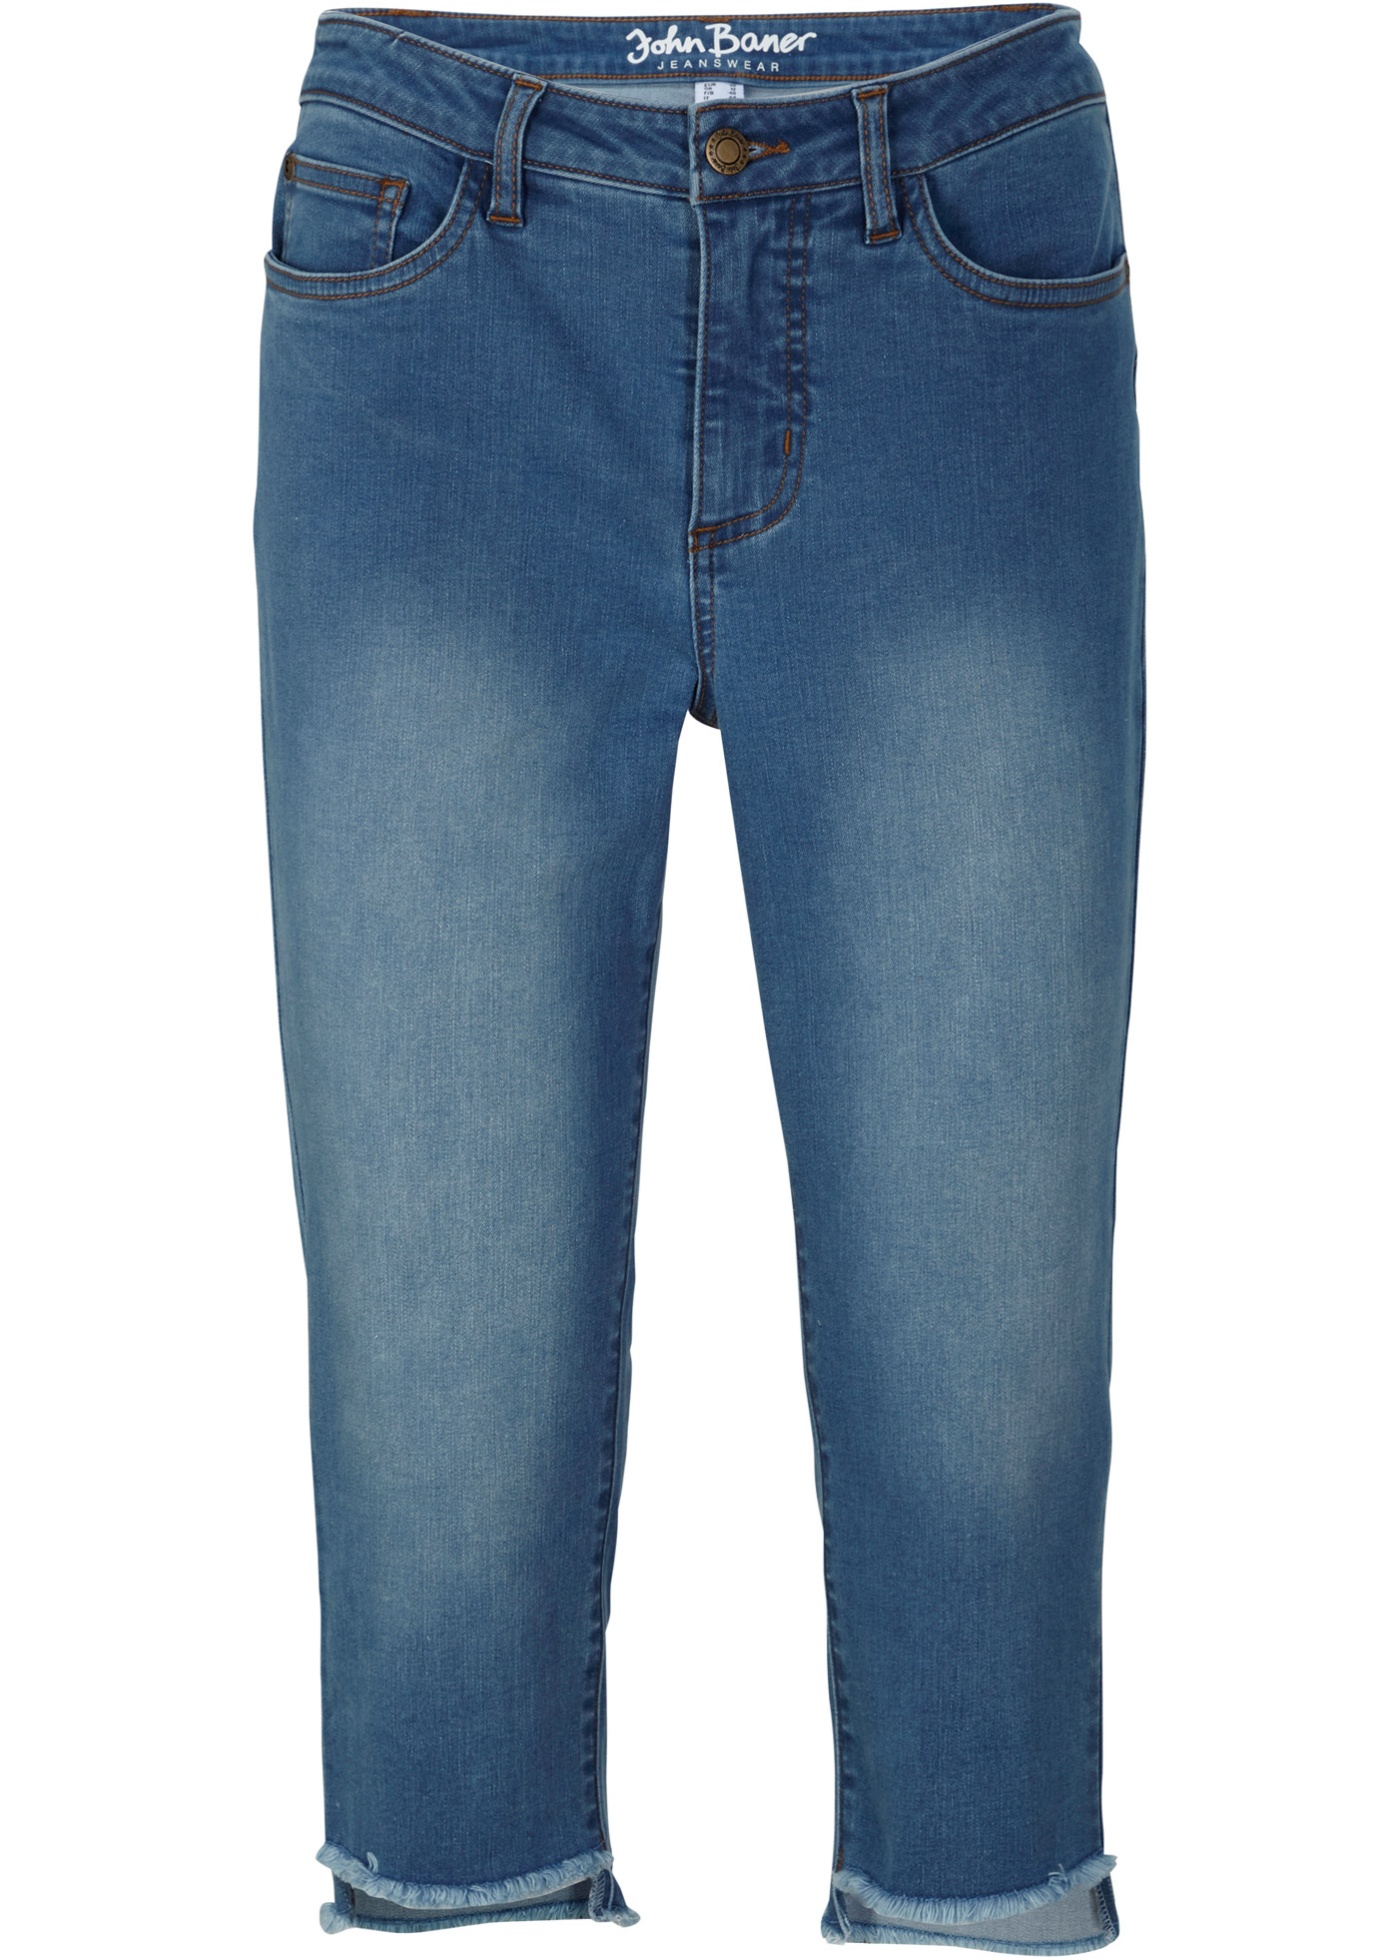 Corrigerende capri jeans